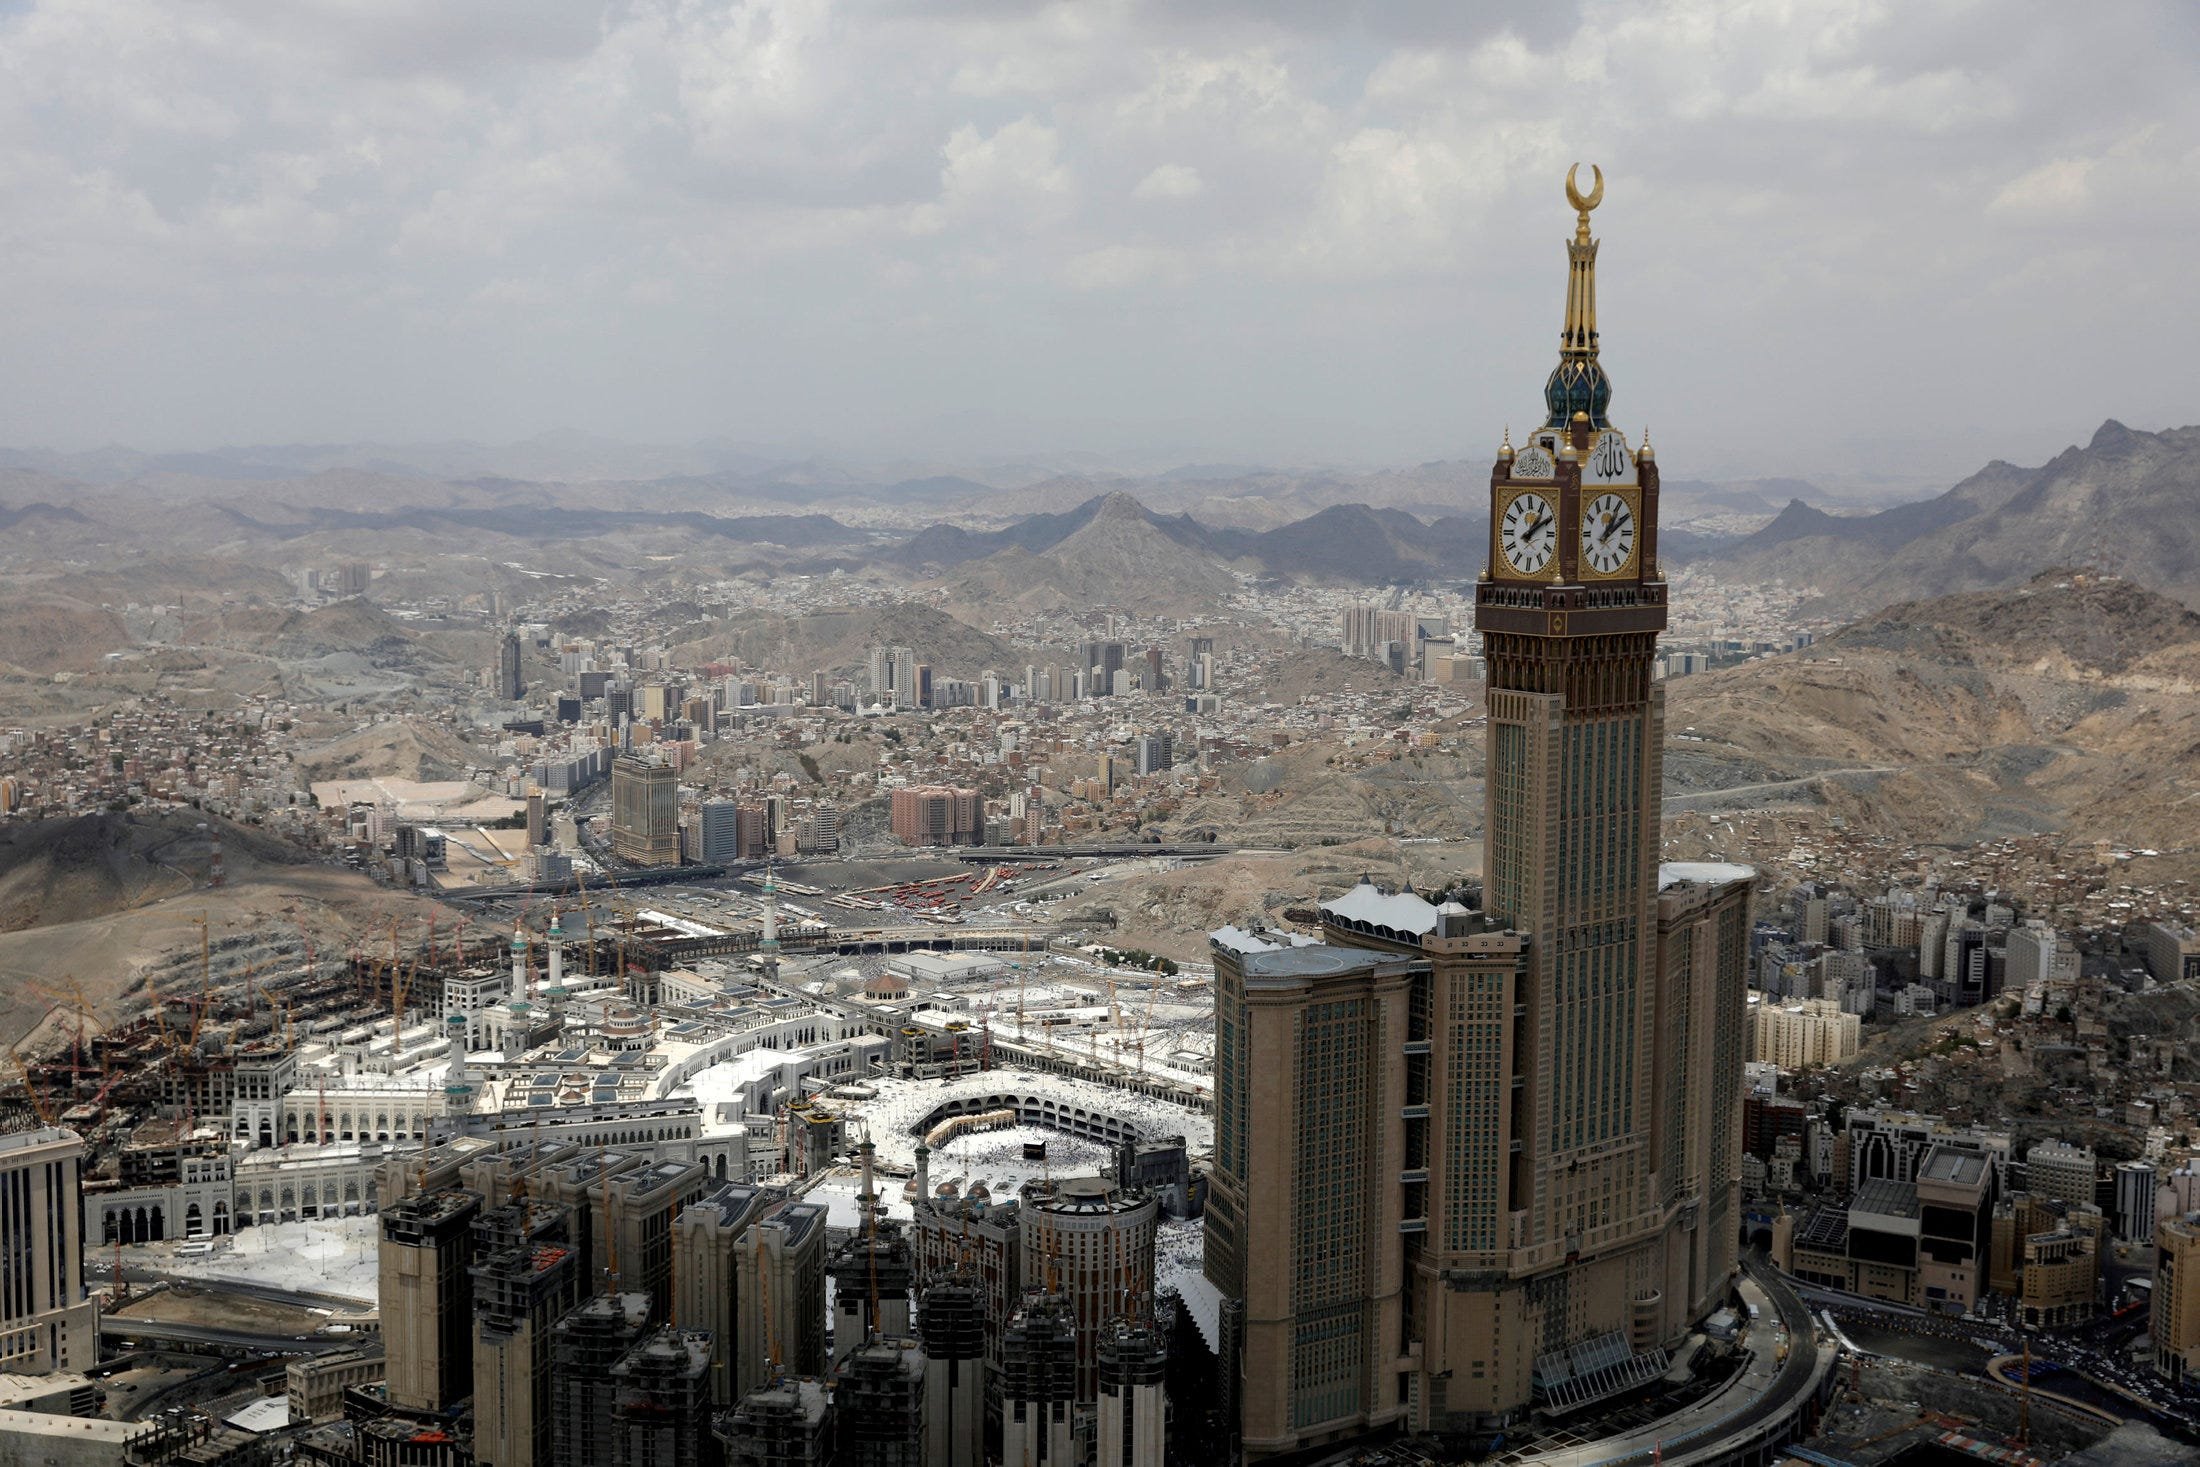 Саудия сегодня. Башня Абрадж Аль-Бейт. Королевство Саудовская Аравия. Саудовская Аравия горы Хиджаз. Саудовская Аравия столица Эр-Рияд.